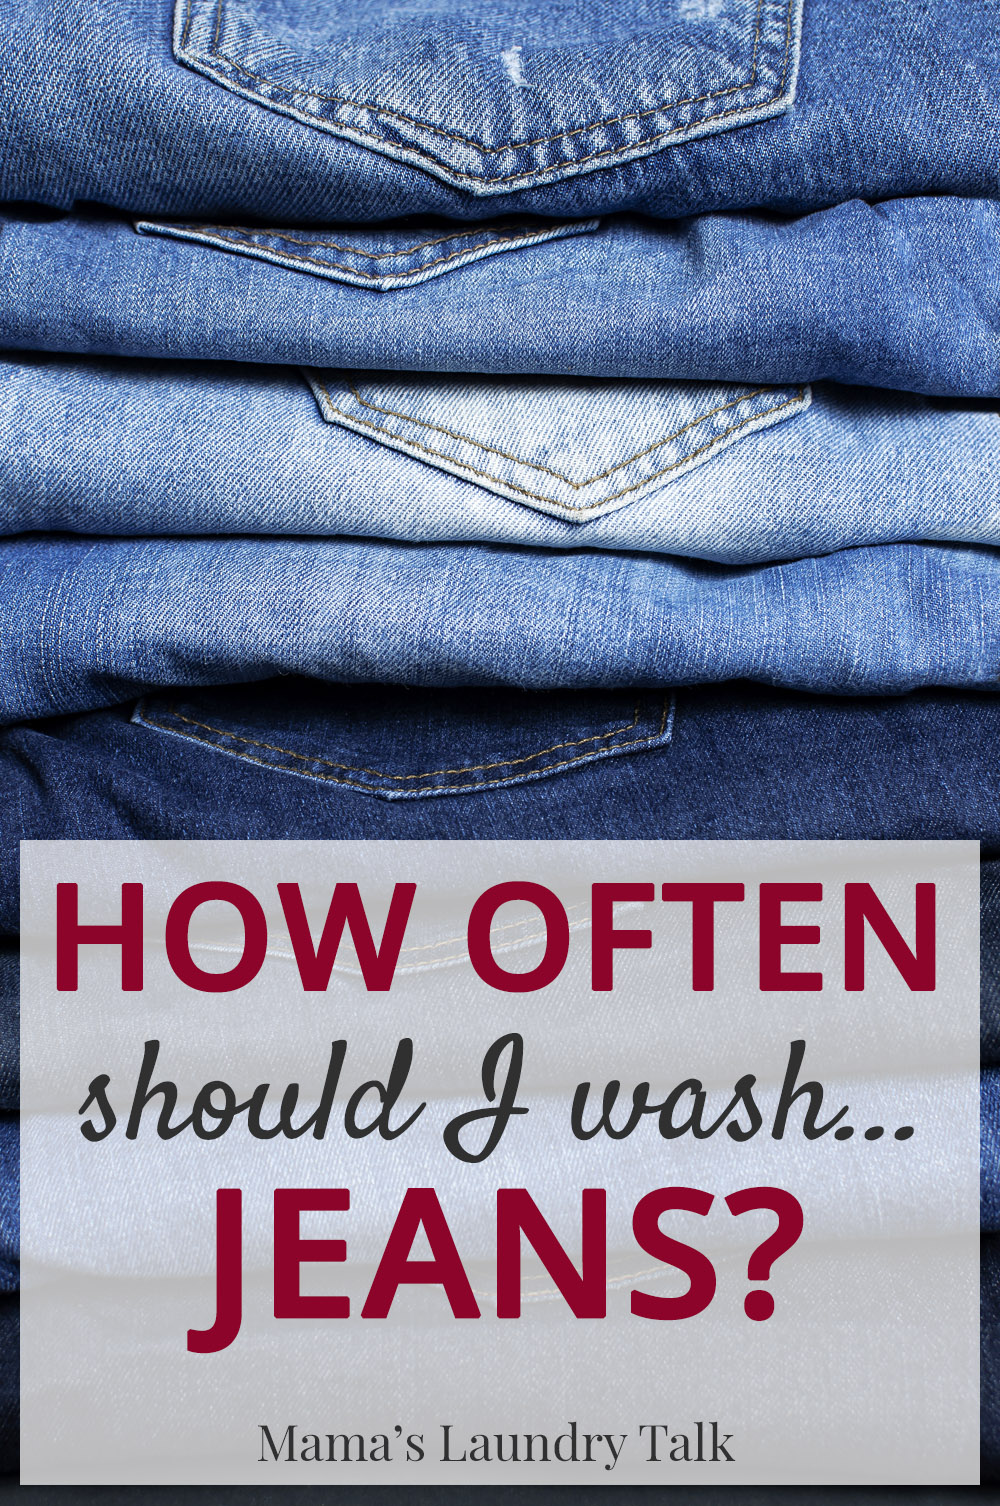 https://www.mamaslaundrytalk.com/wp-content/uploads/2011/02/How-Often-Should-I-Wash-Jeans.jpg